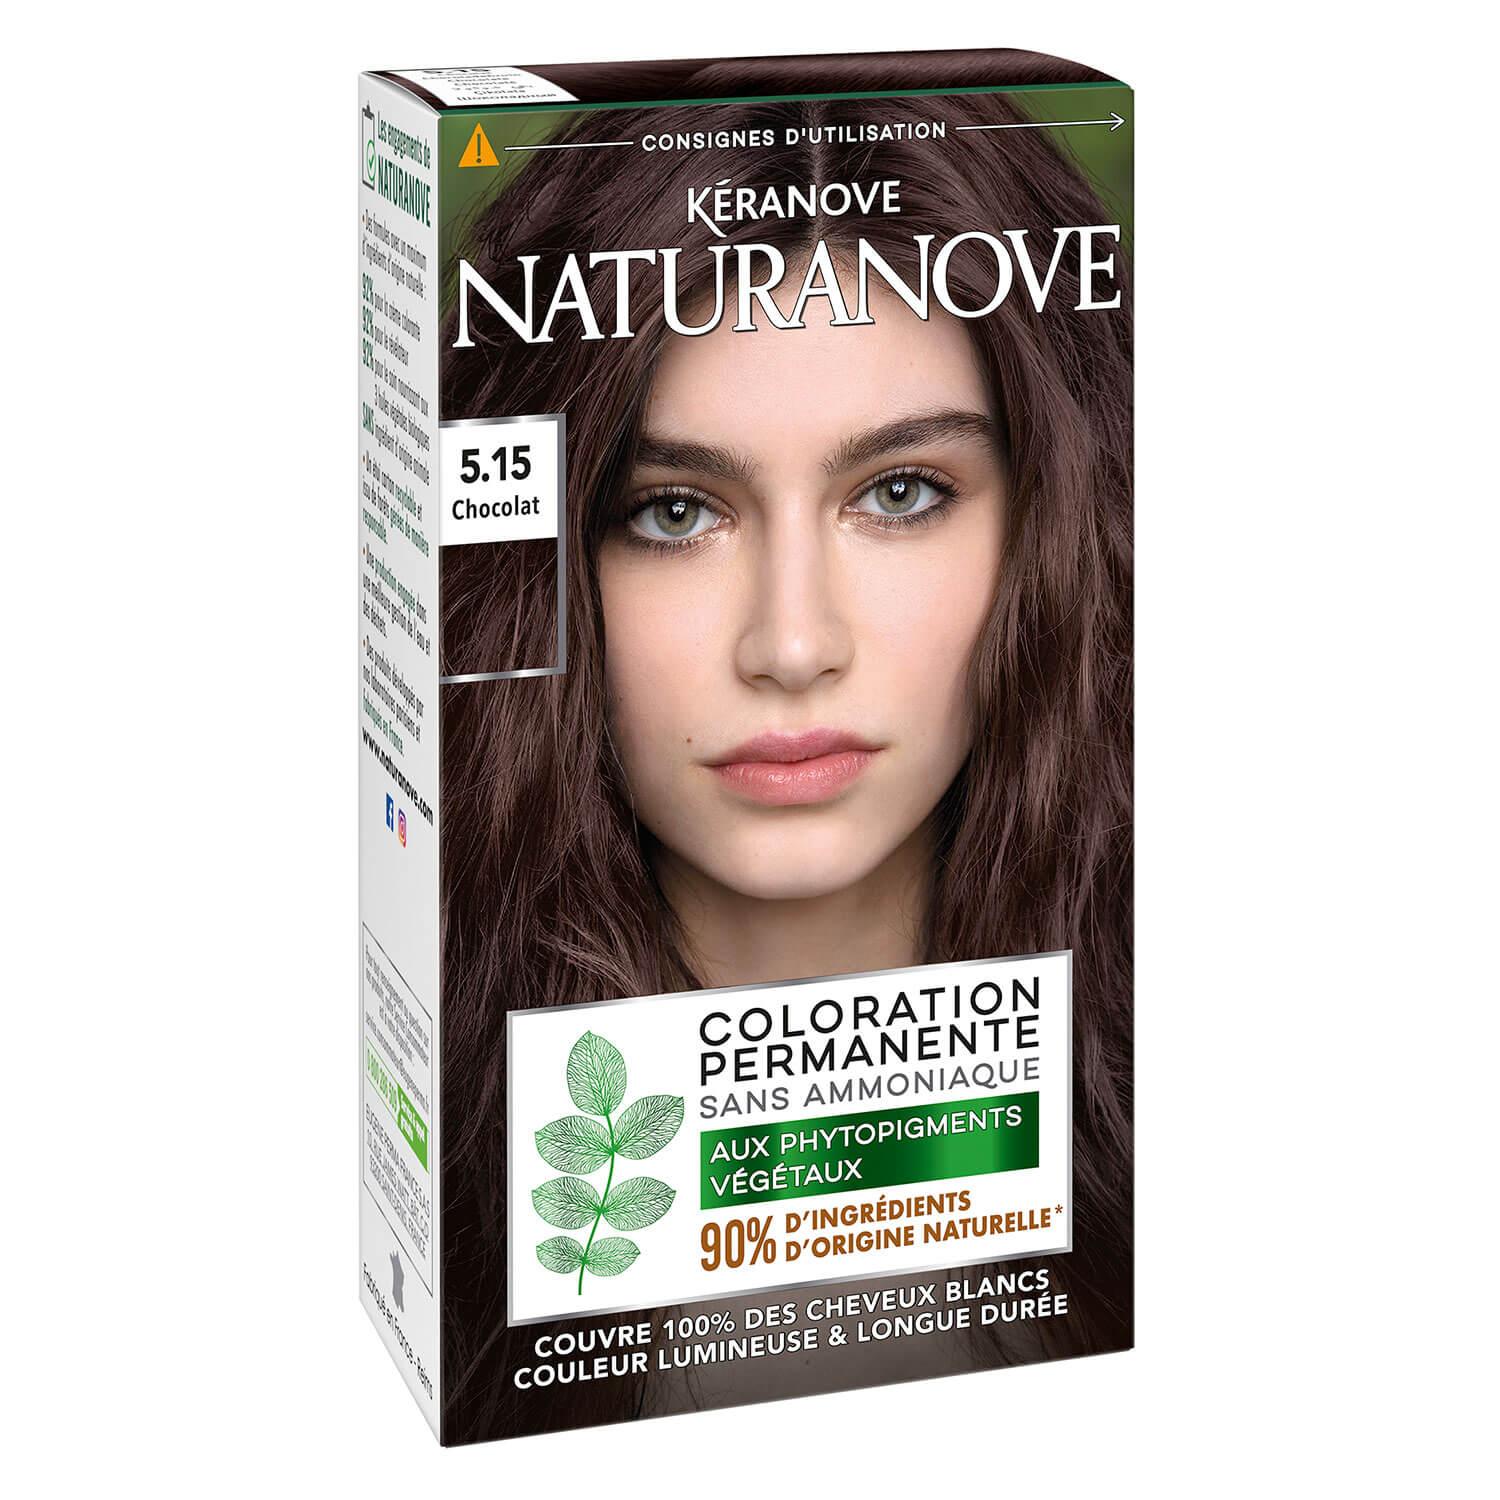 Naturanove - Permanent Hair Color Chocolate 5.15